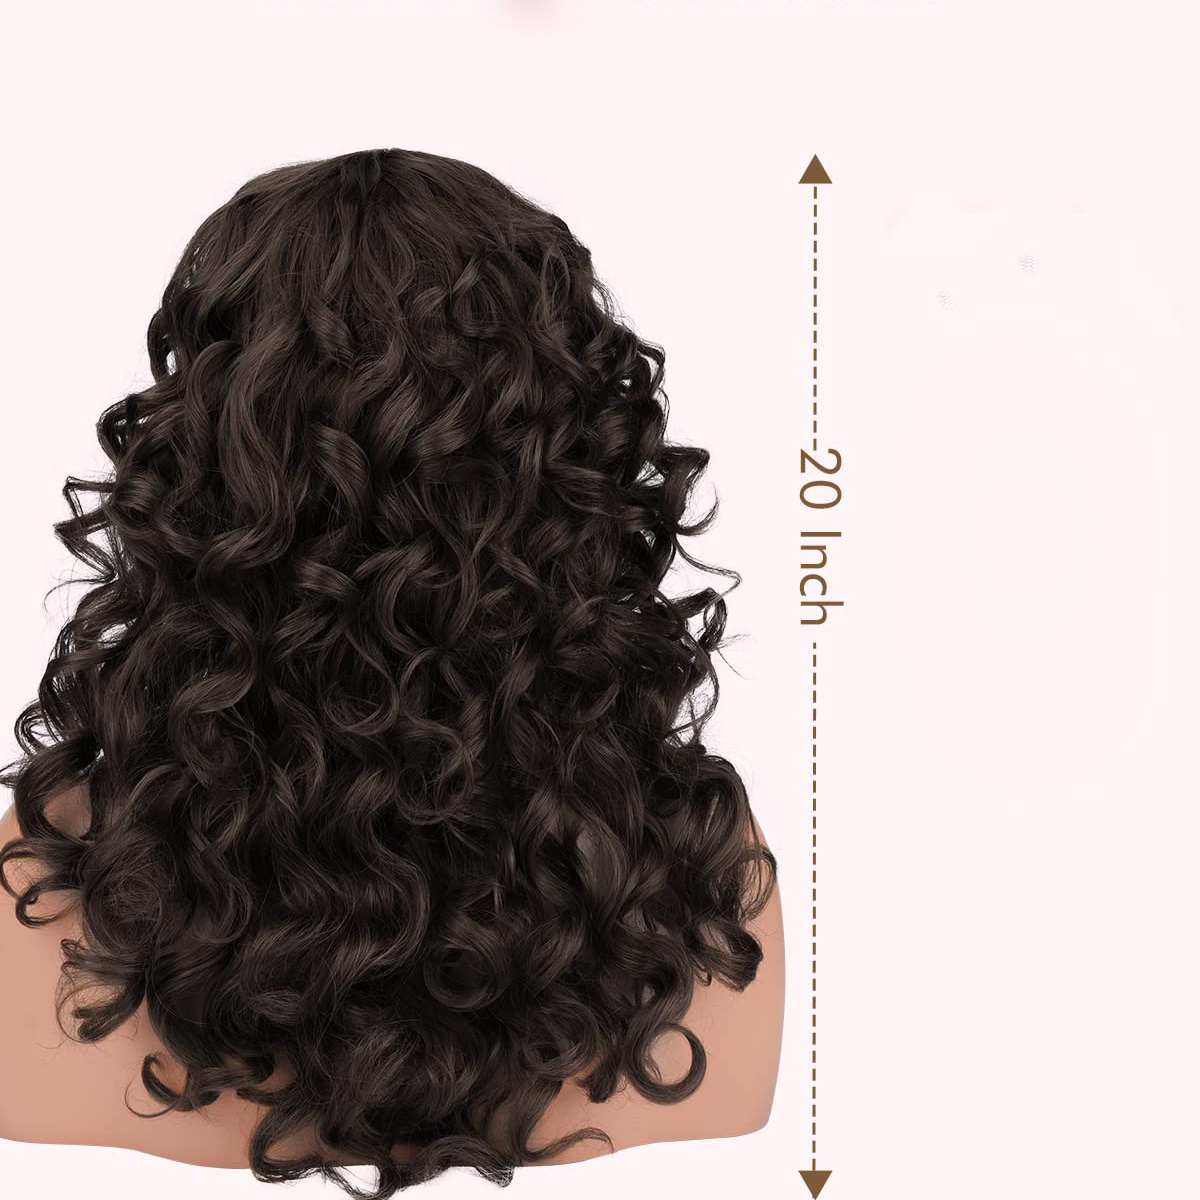  Miss U Hair 20 140g Women Long Curly Synthetic Hair